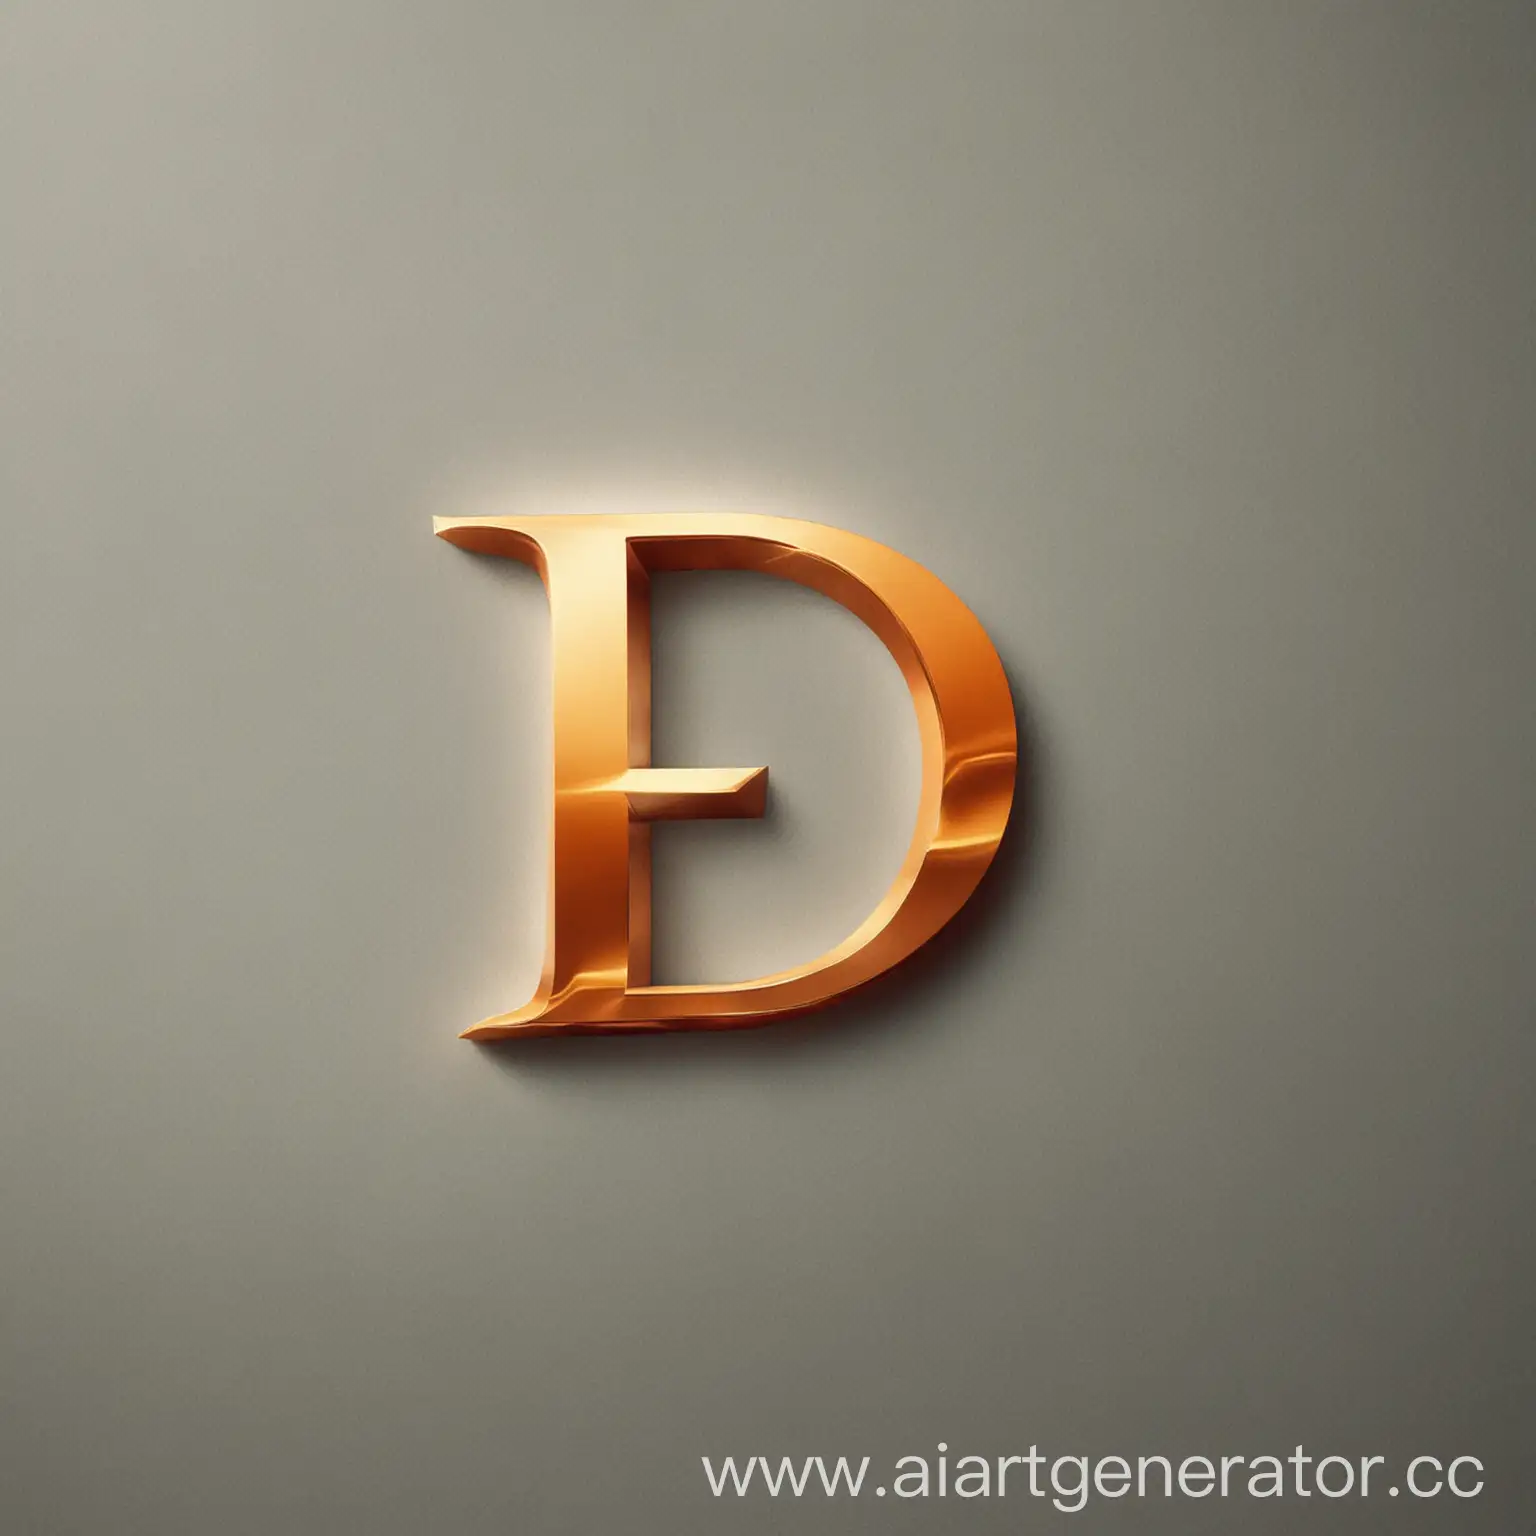 буквы E D на логотипе
